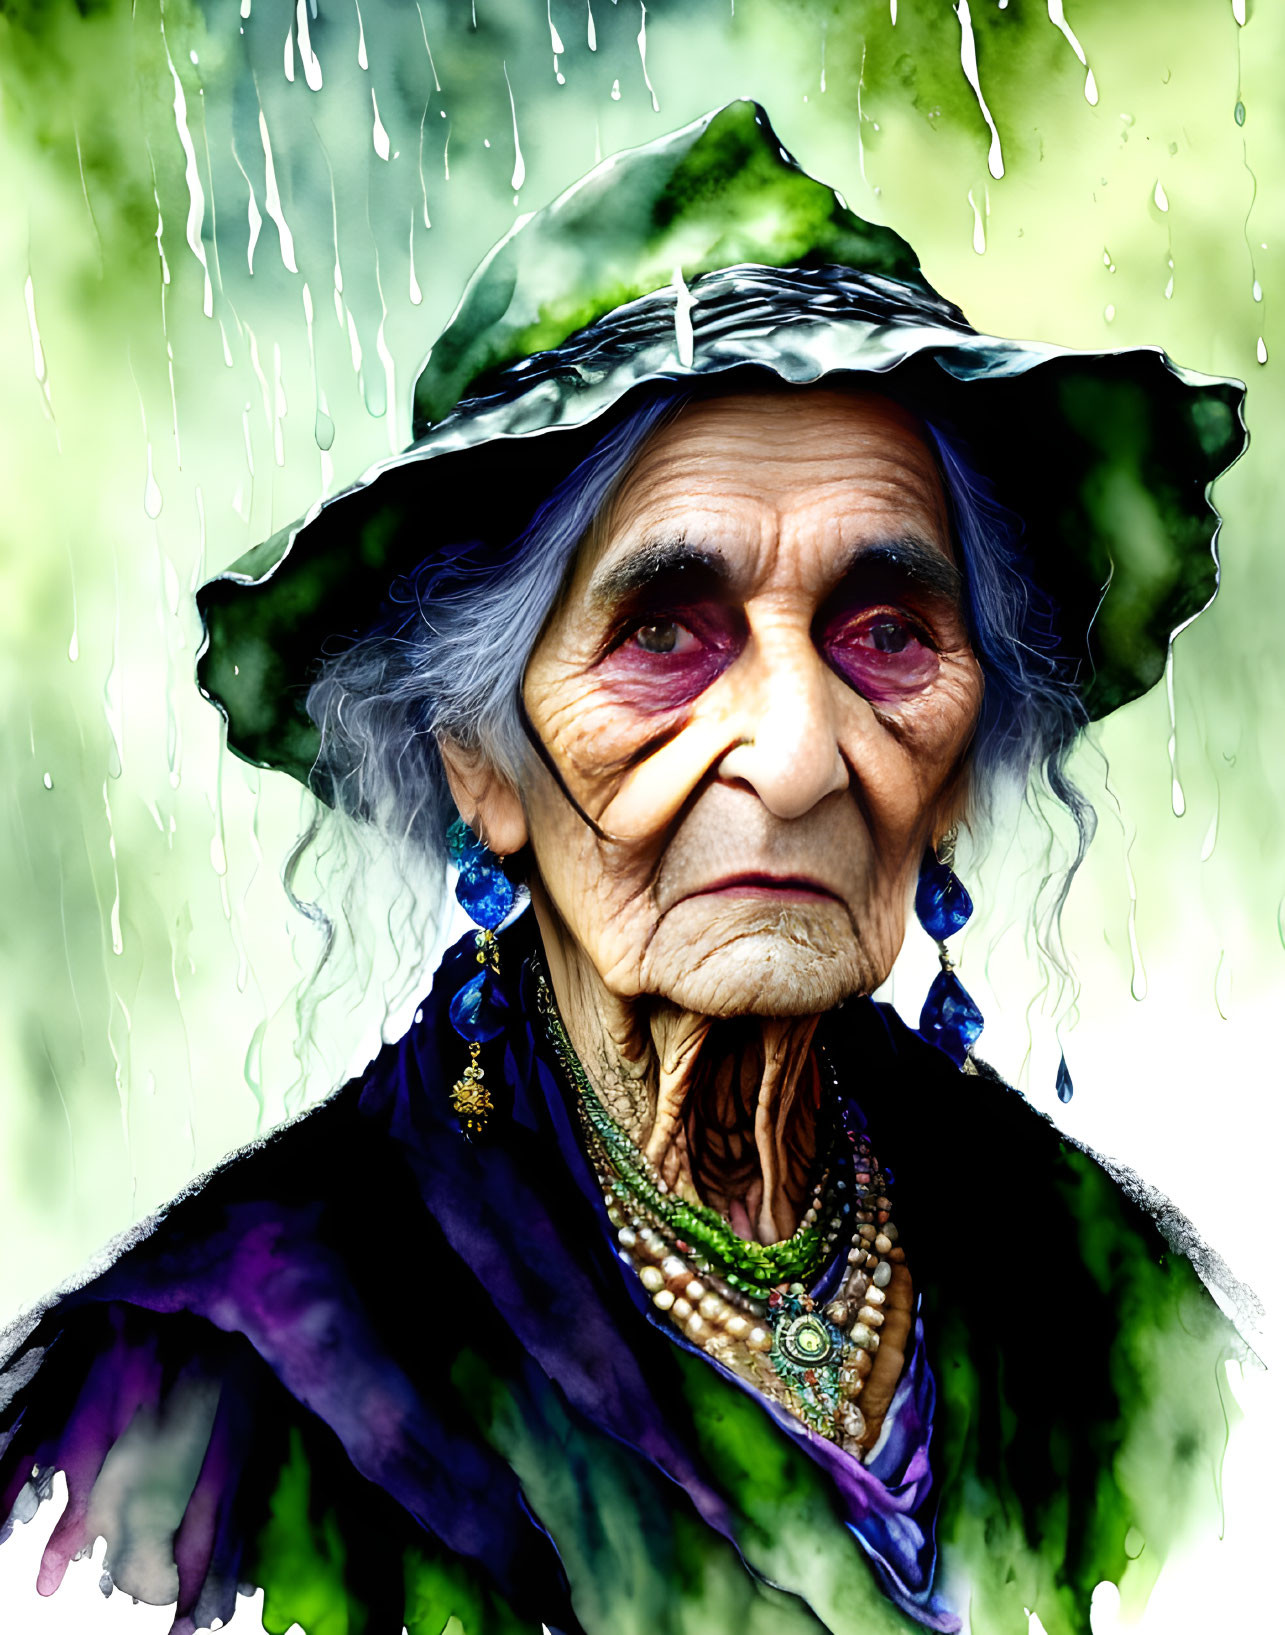 Elderly Woman in Green Hat and Purple Shawl with Rain Streaks